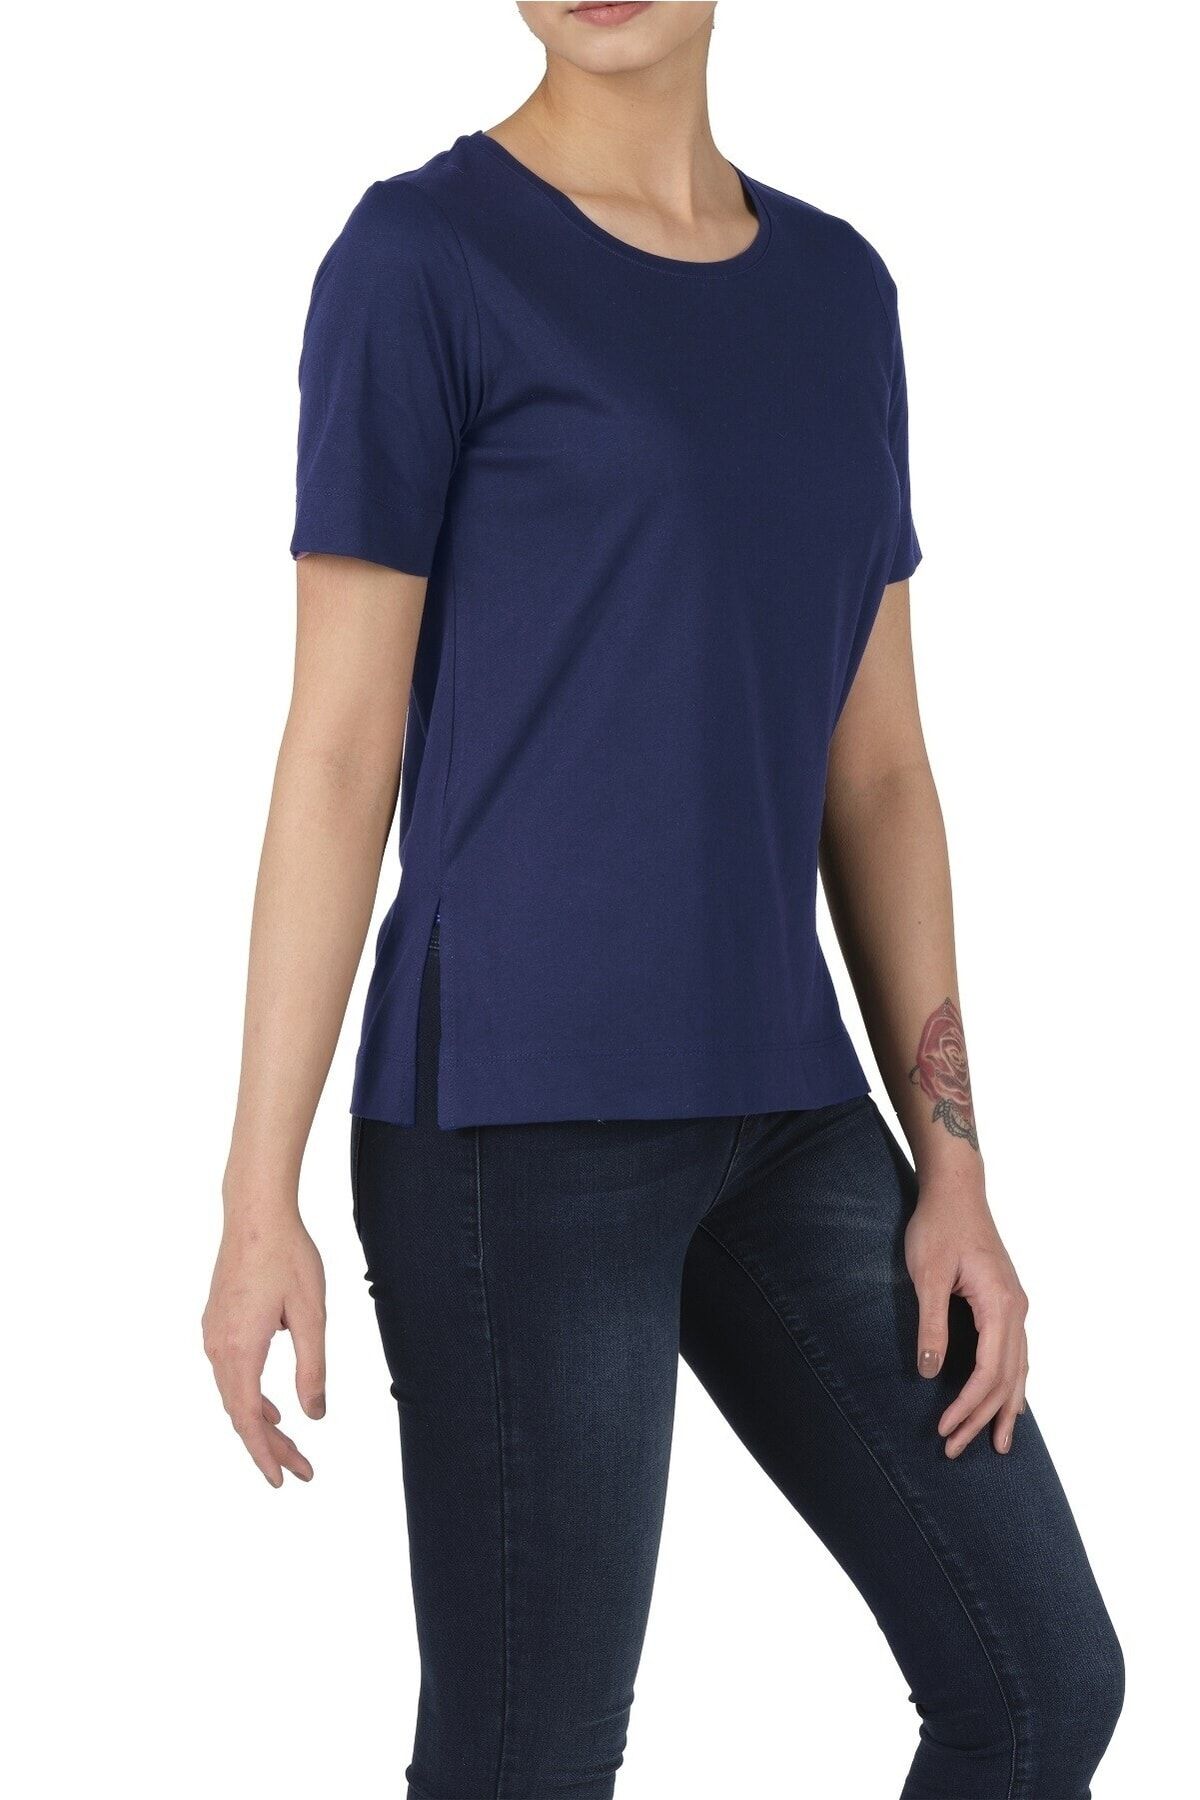 fsm1453 Kadın Pamuklu Modal Kısa Kollu Yırtmaçlı Comfort Fit T-shirt -2405